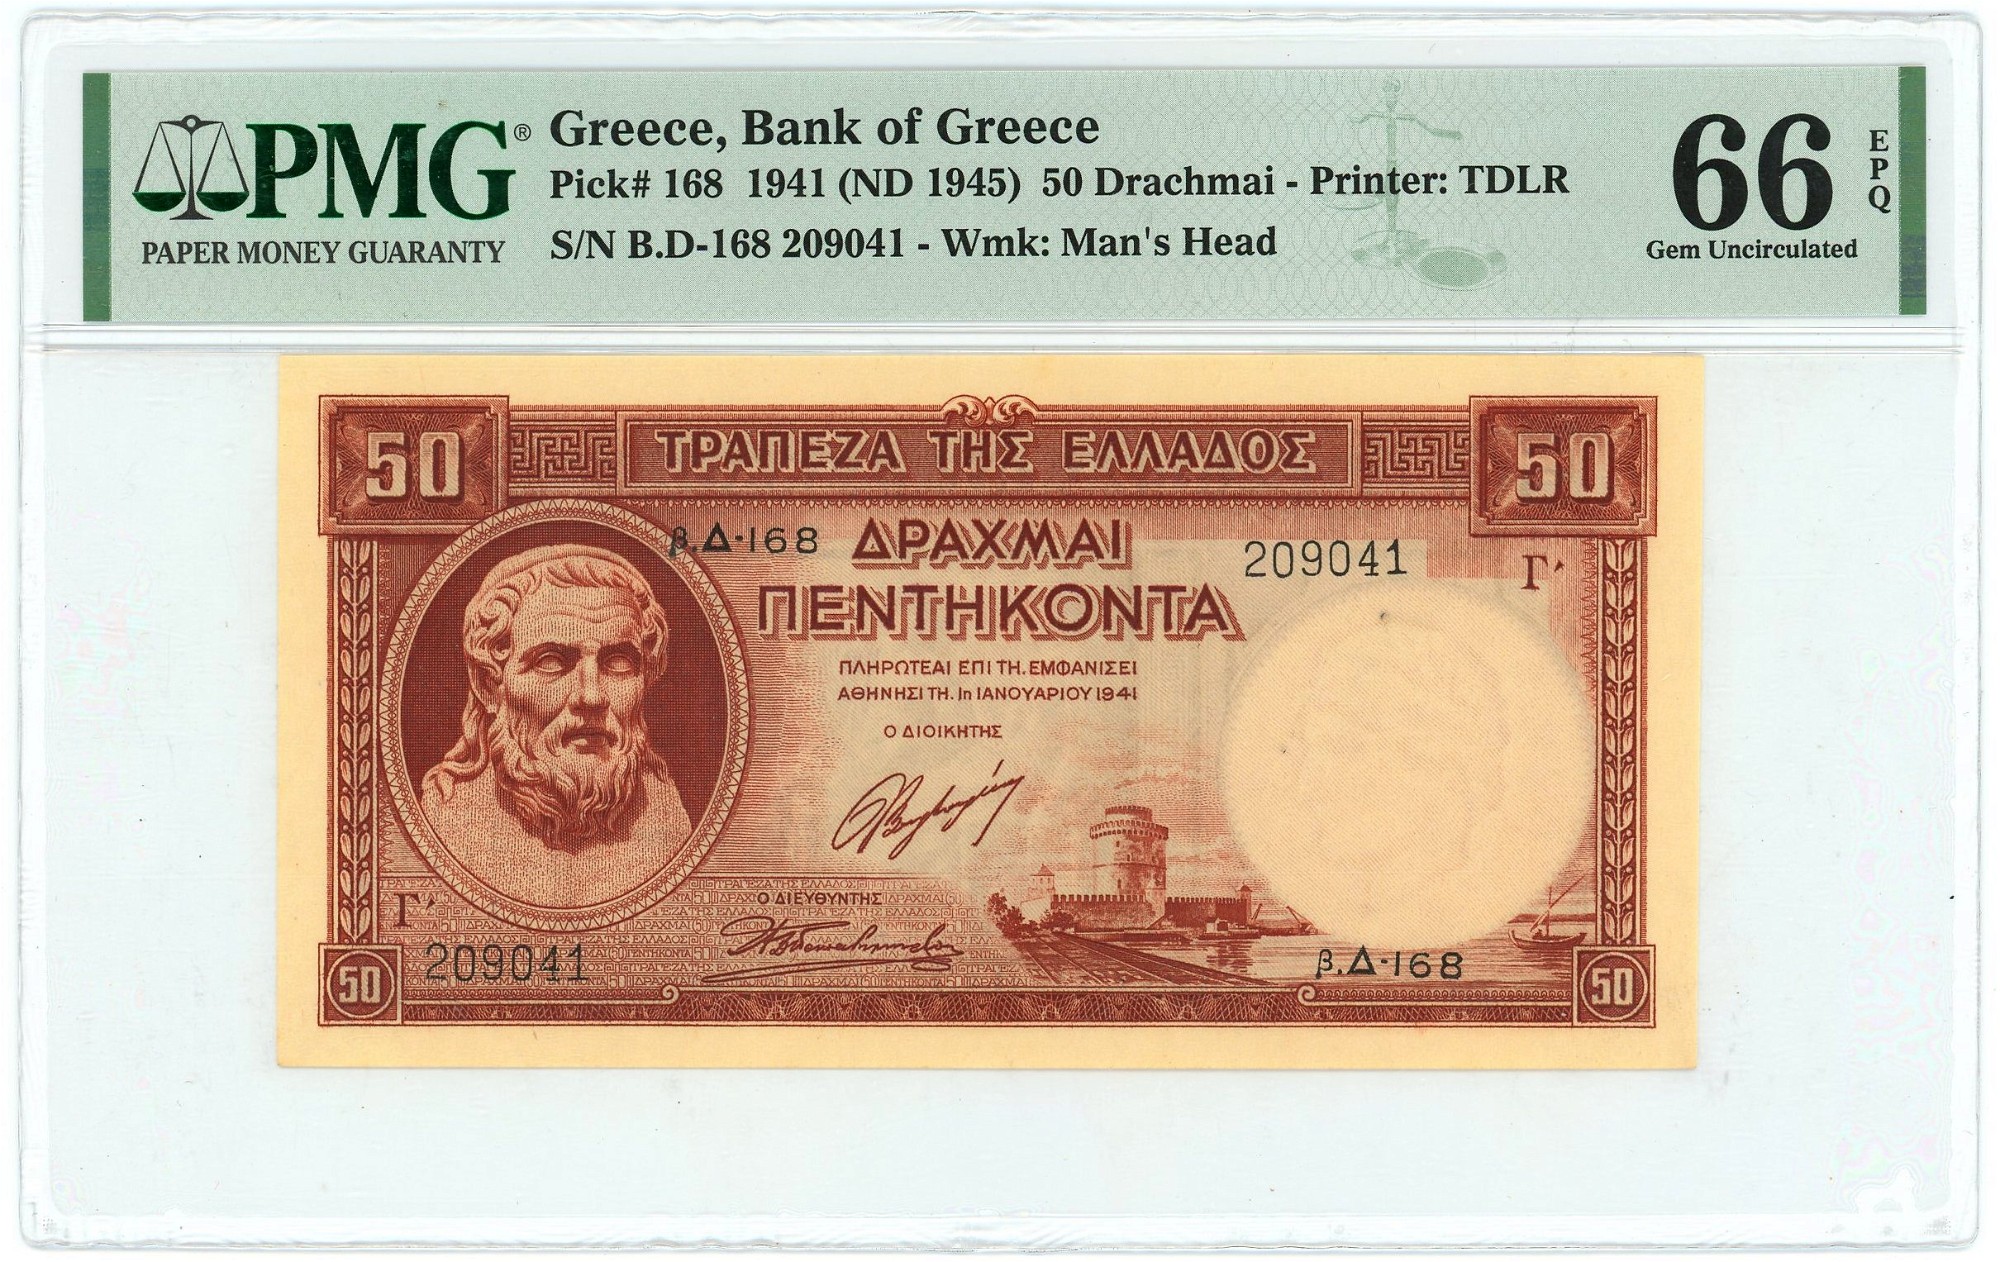 Greece 50 Drachmai 1941 (ND) 1945 PMG 66 EPQ Gem UNC | Katz Auction